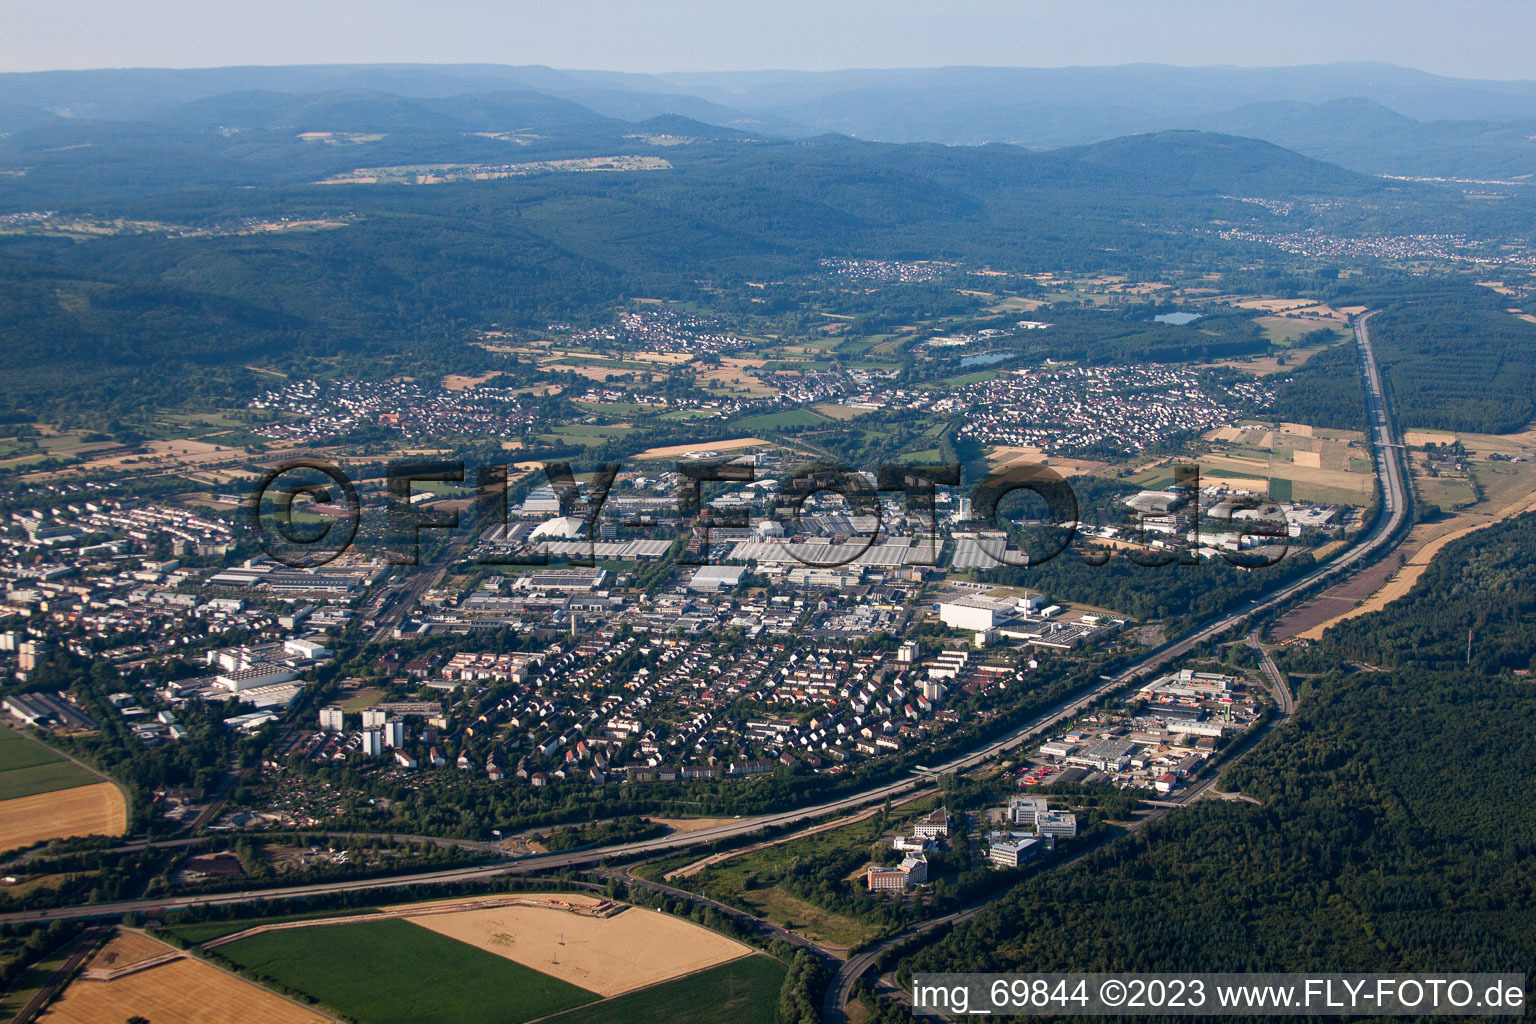 Ettlingen in the state Baden-Wuerttemberg, Germany seen from above